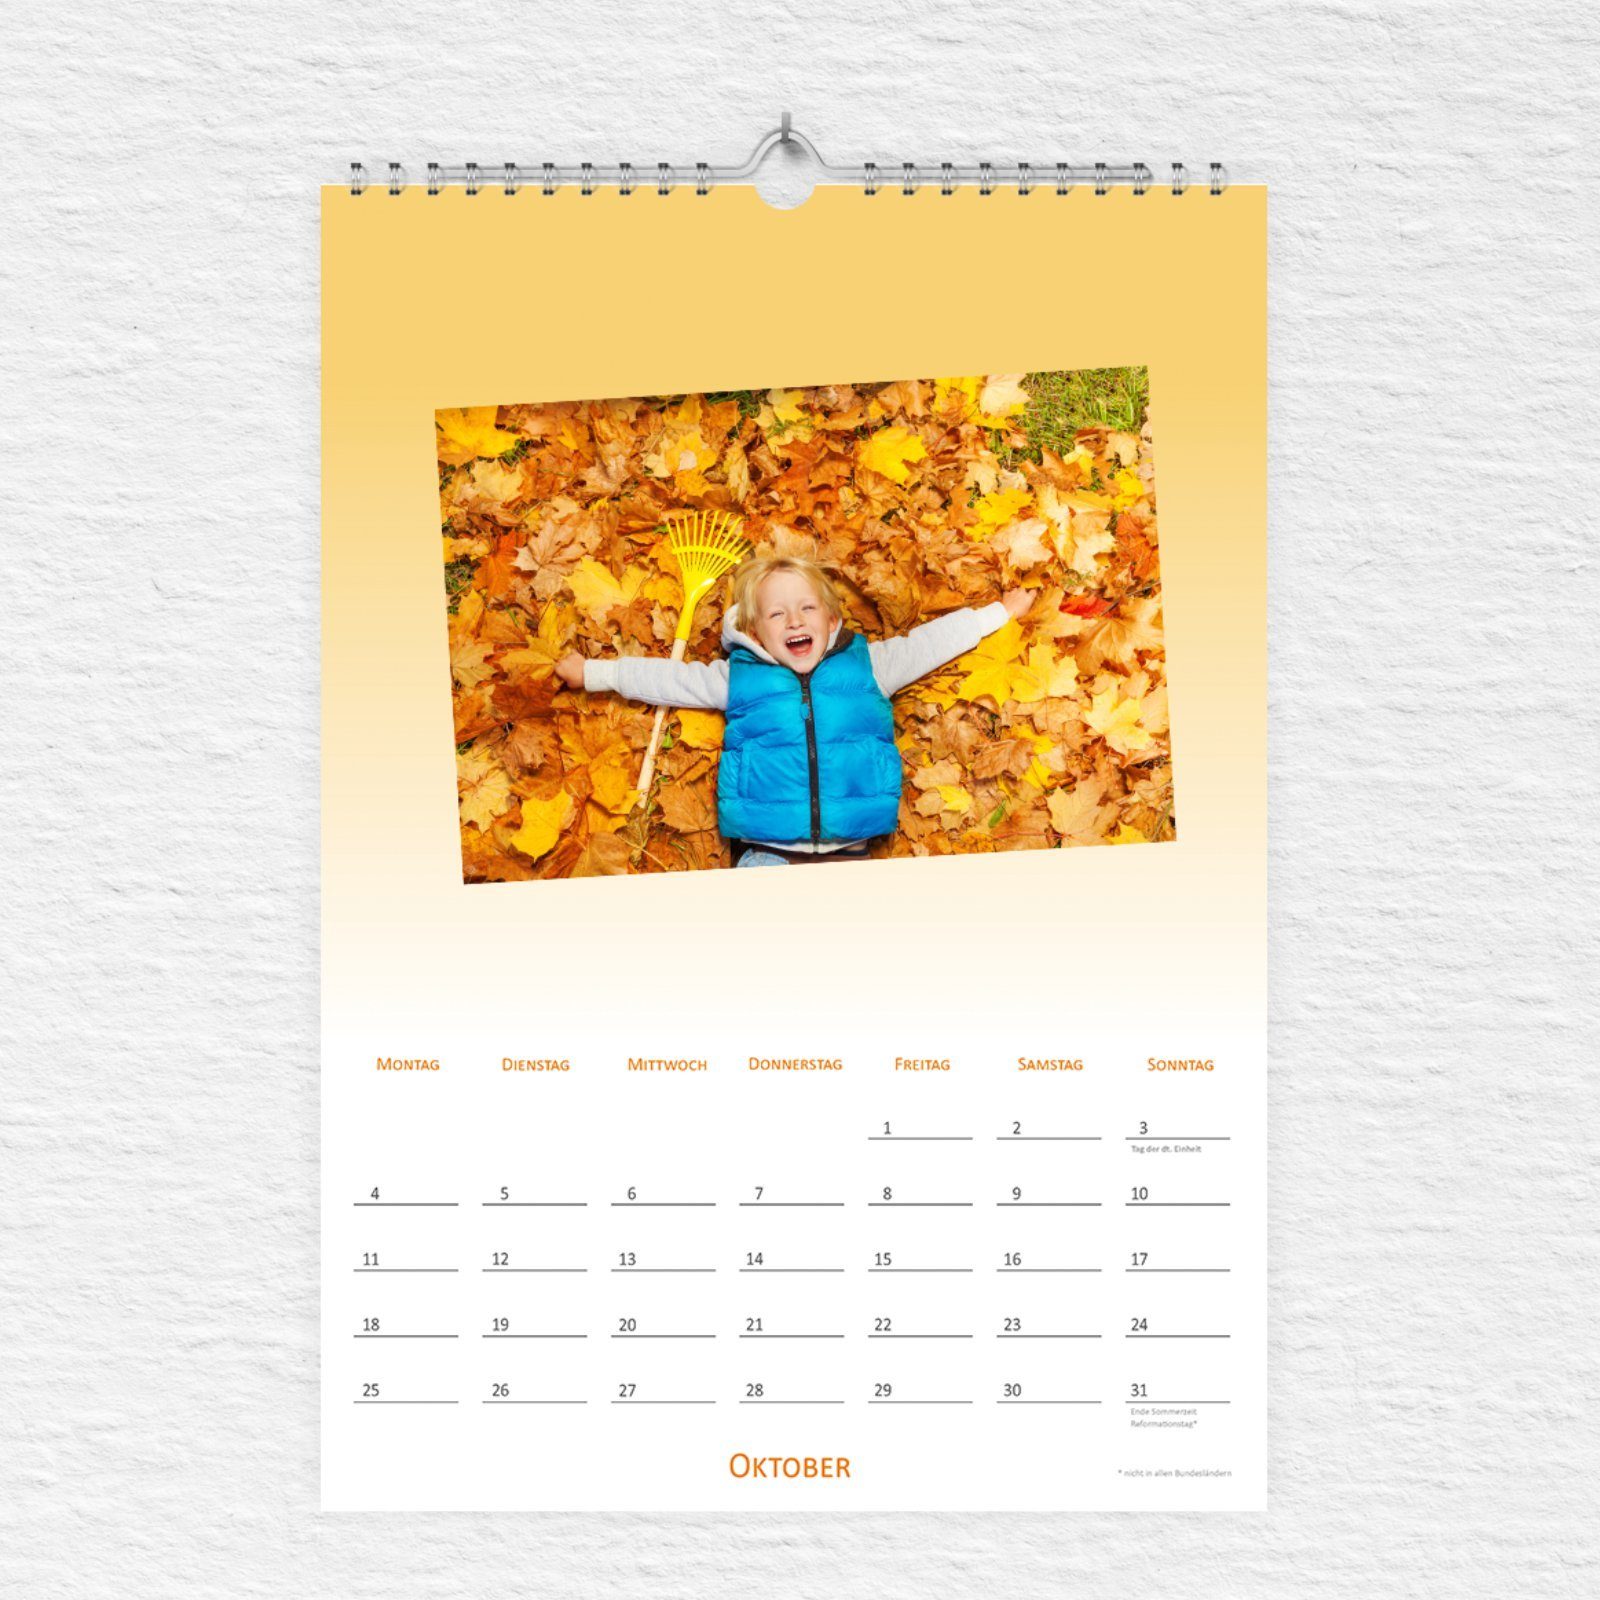 nikima Packpapier Bastelkalender Fotokalender Verlauf 2024